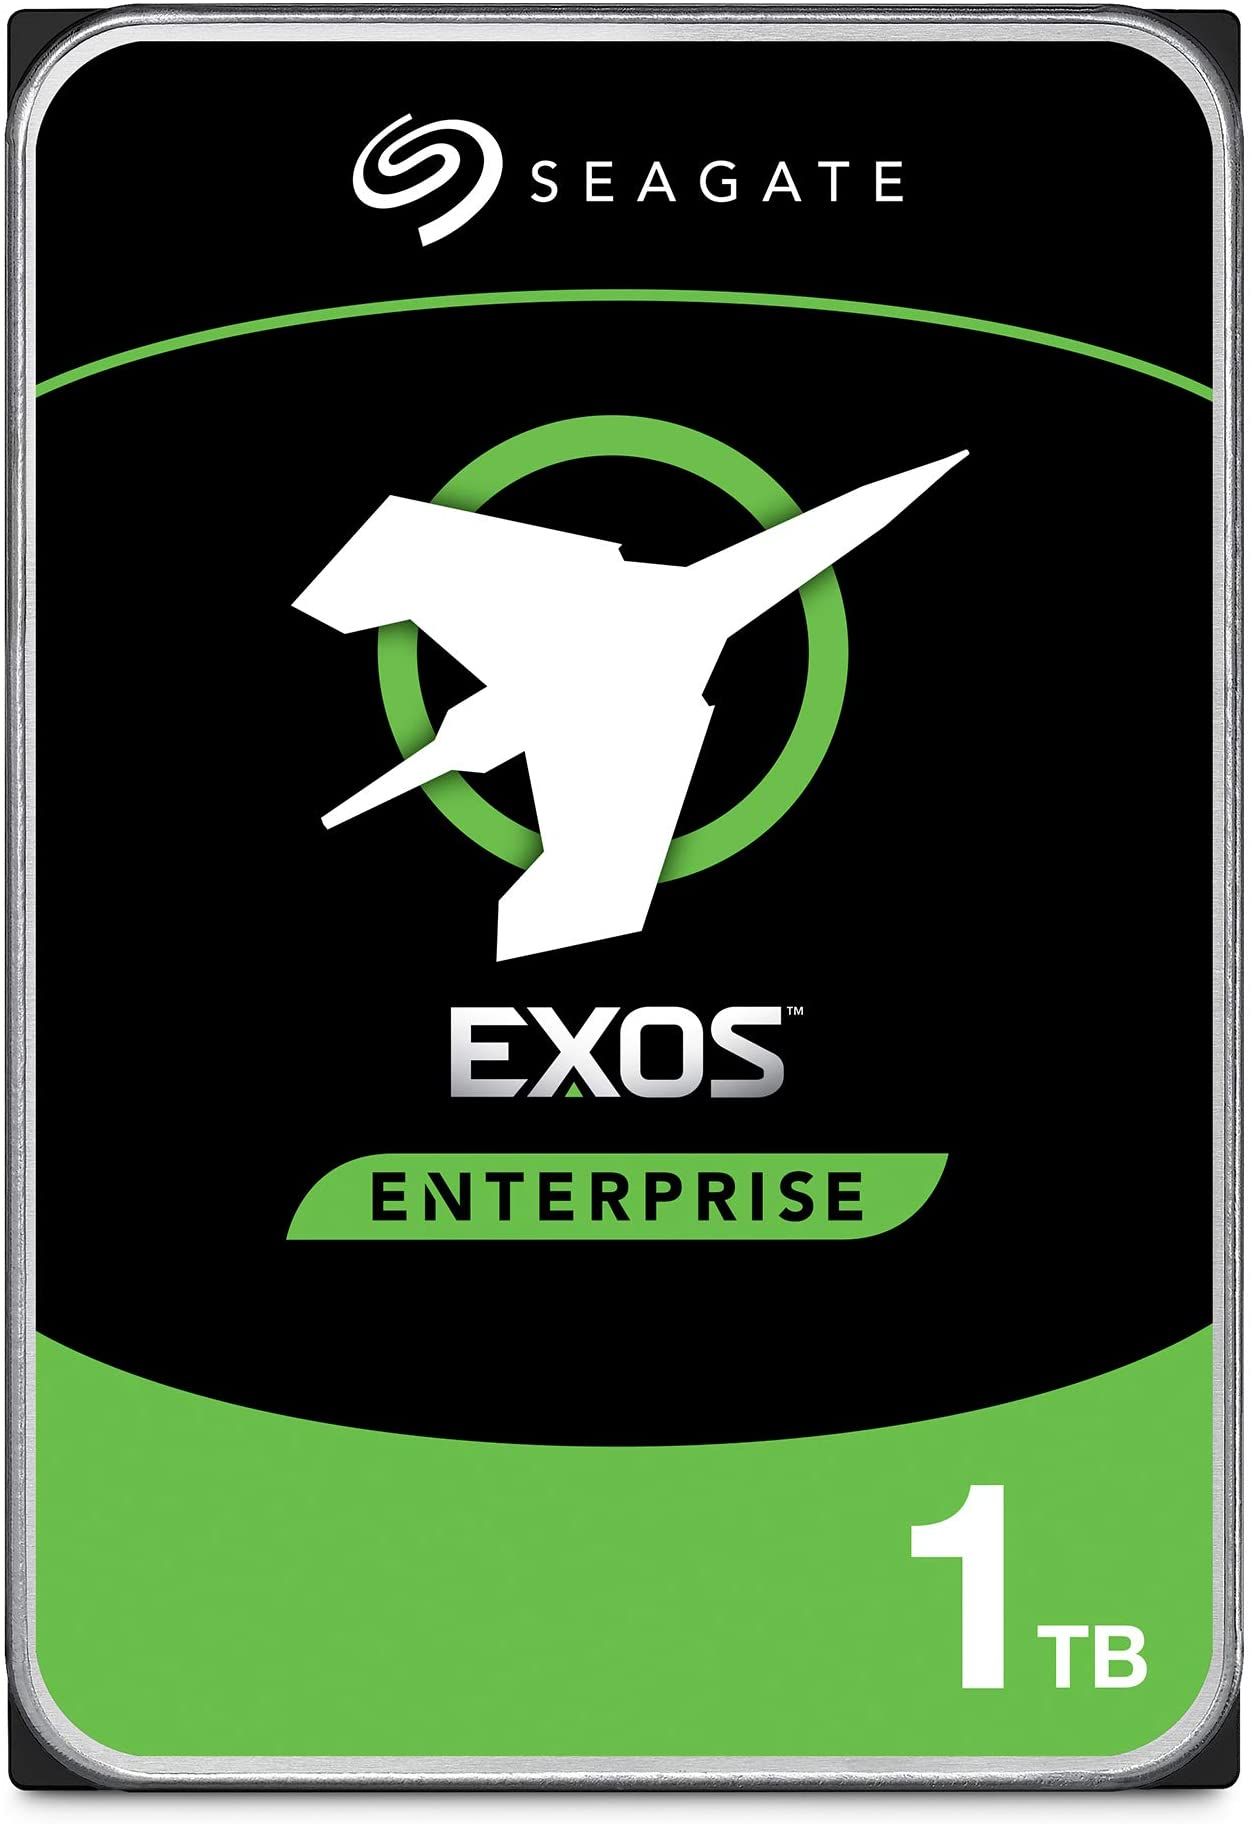 SEAGATE EXOS 7E8 Enterprise Capacity 1TB HDD 7200rpm SAS 256MB cache 3.5inch 24x7 512Native BLK_1